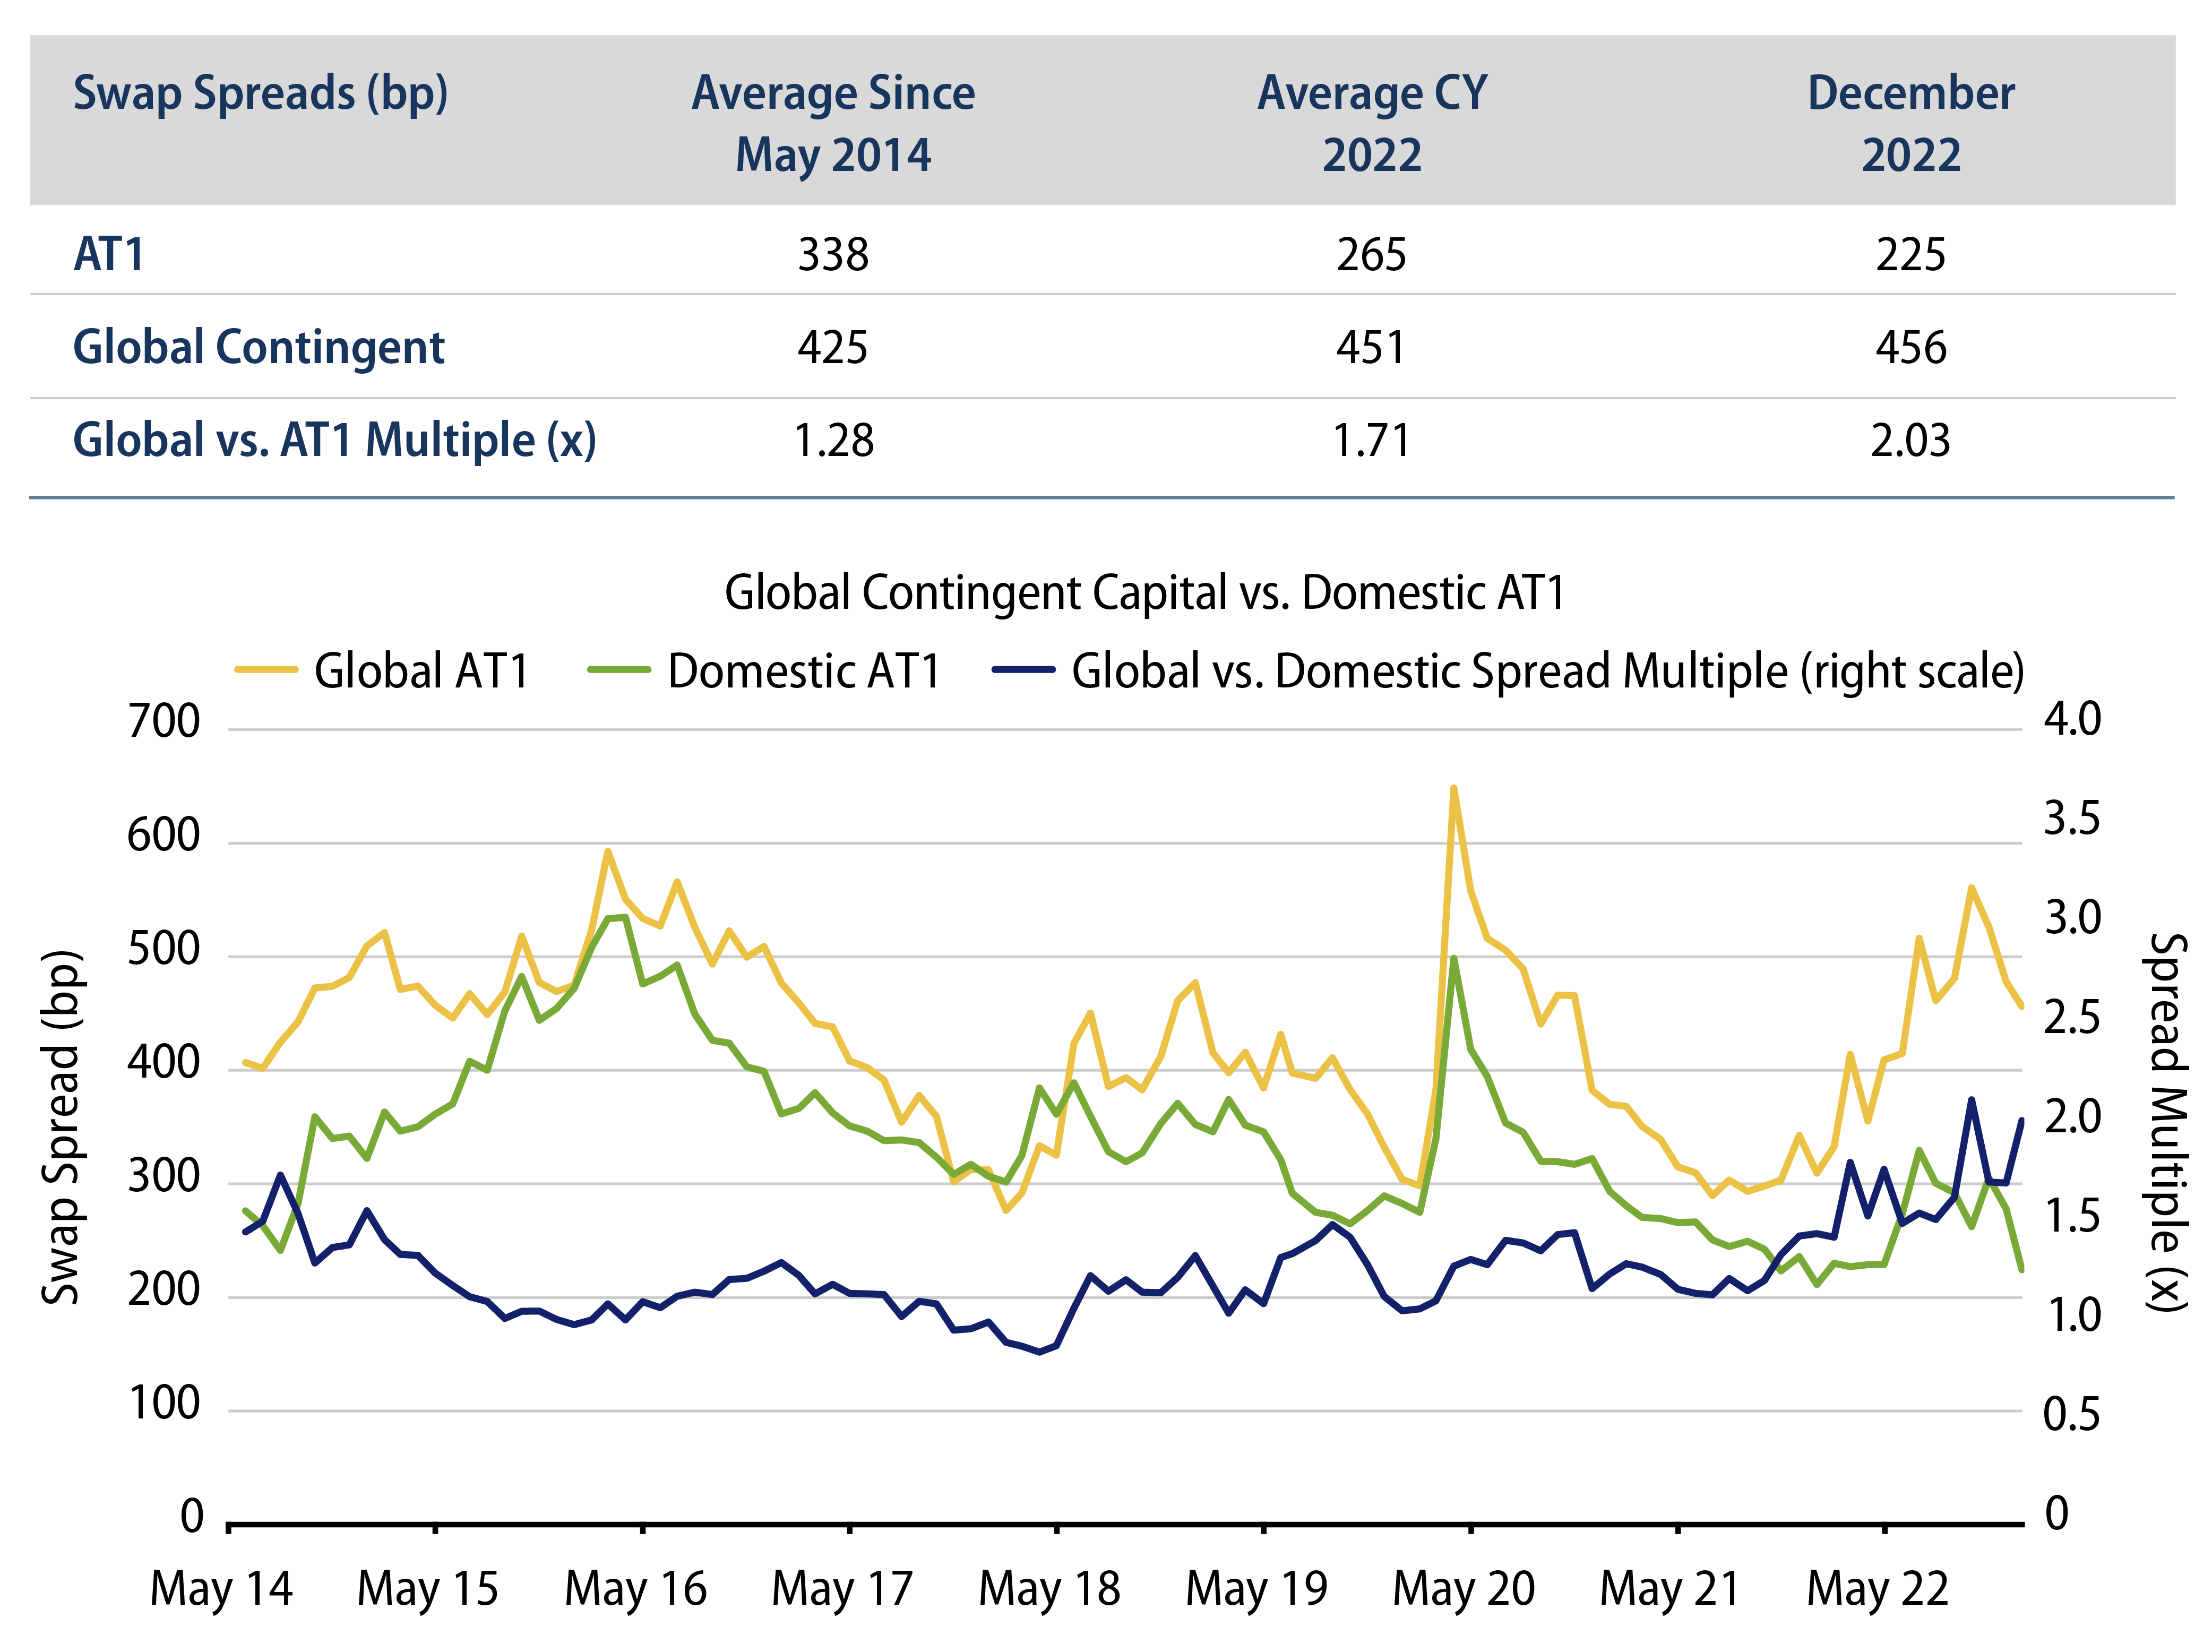 Global Contingent Capital Versus Domestic AT1